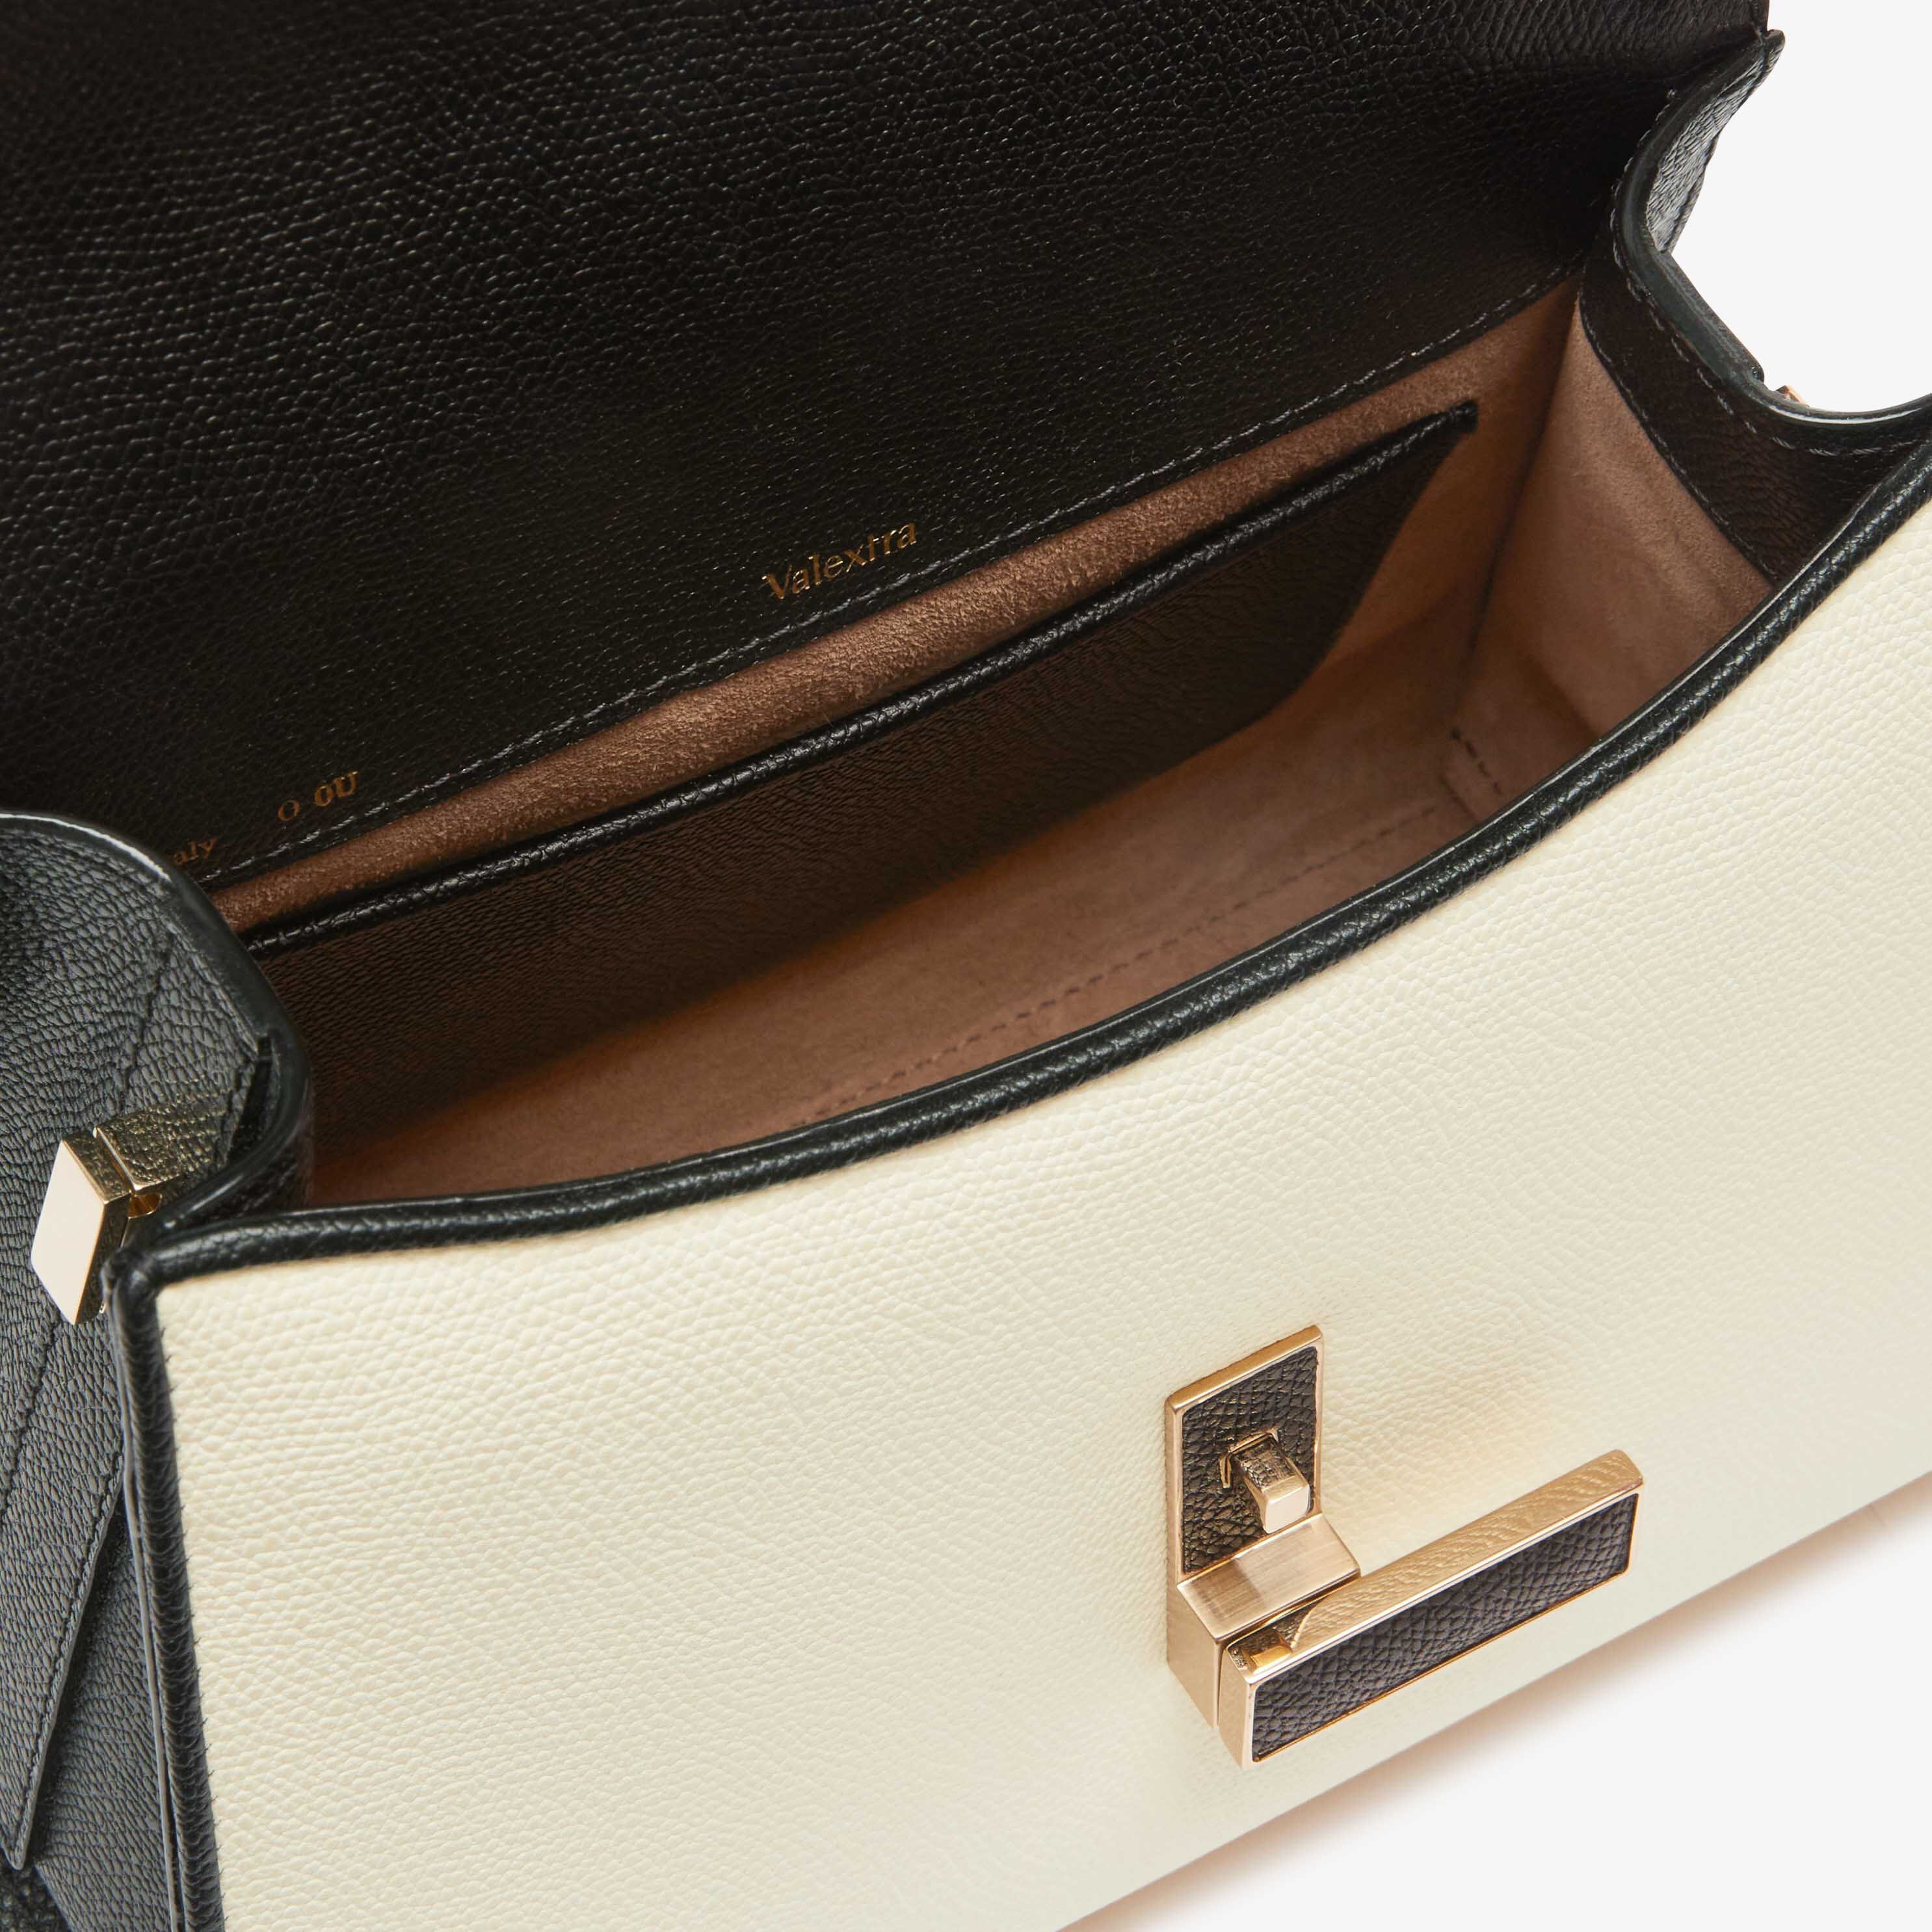 Iside chiaroscuro top handle mini bag - Pergamena White/Black - Vitello VS - Valextra - 3